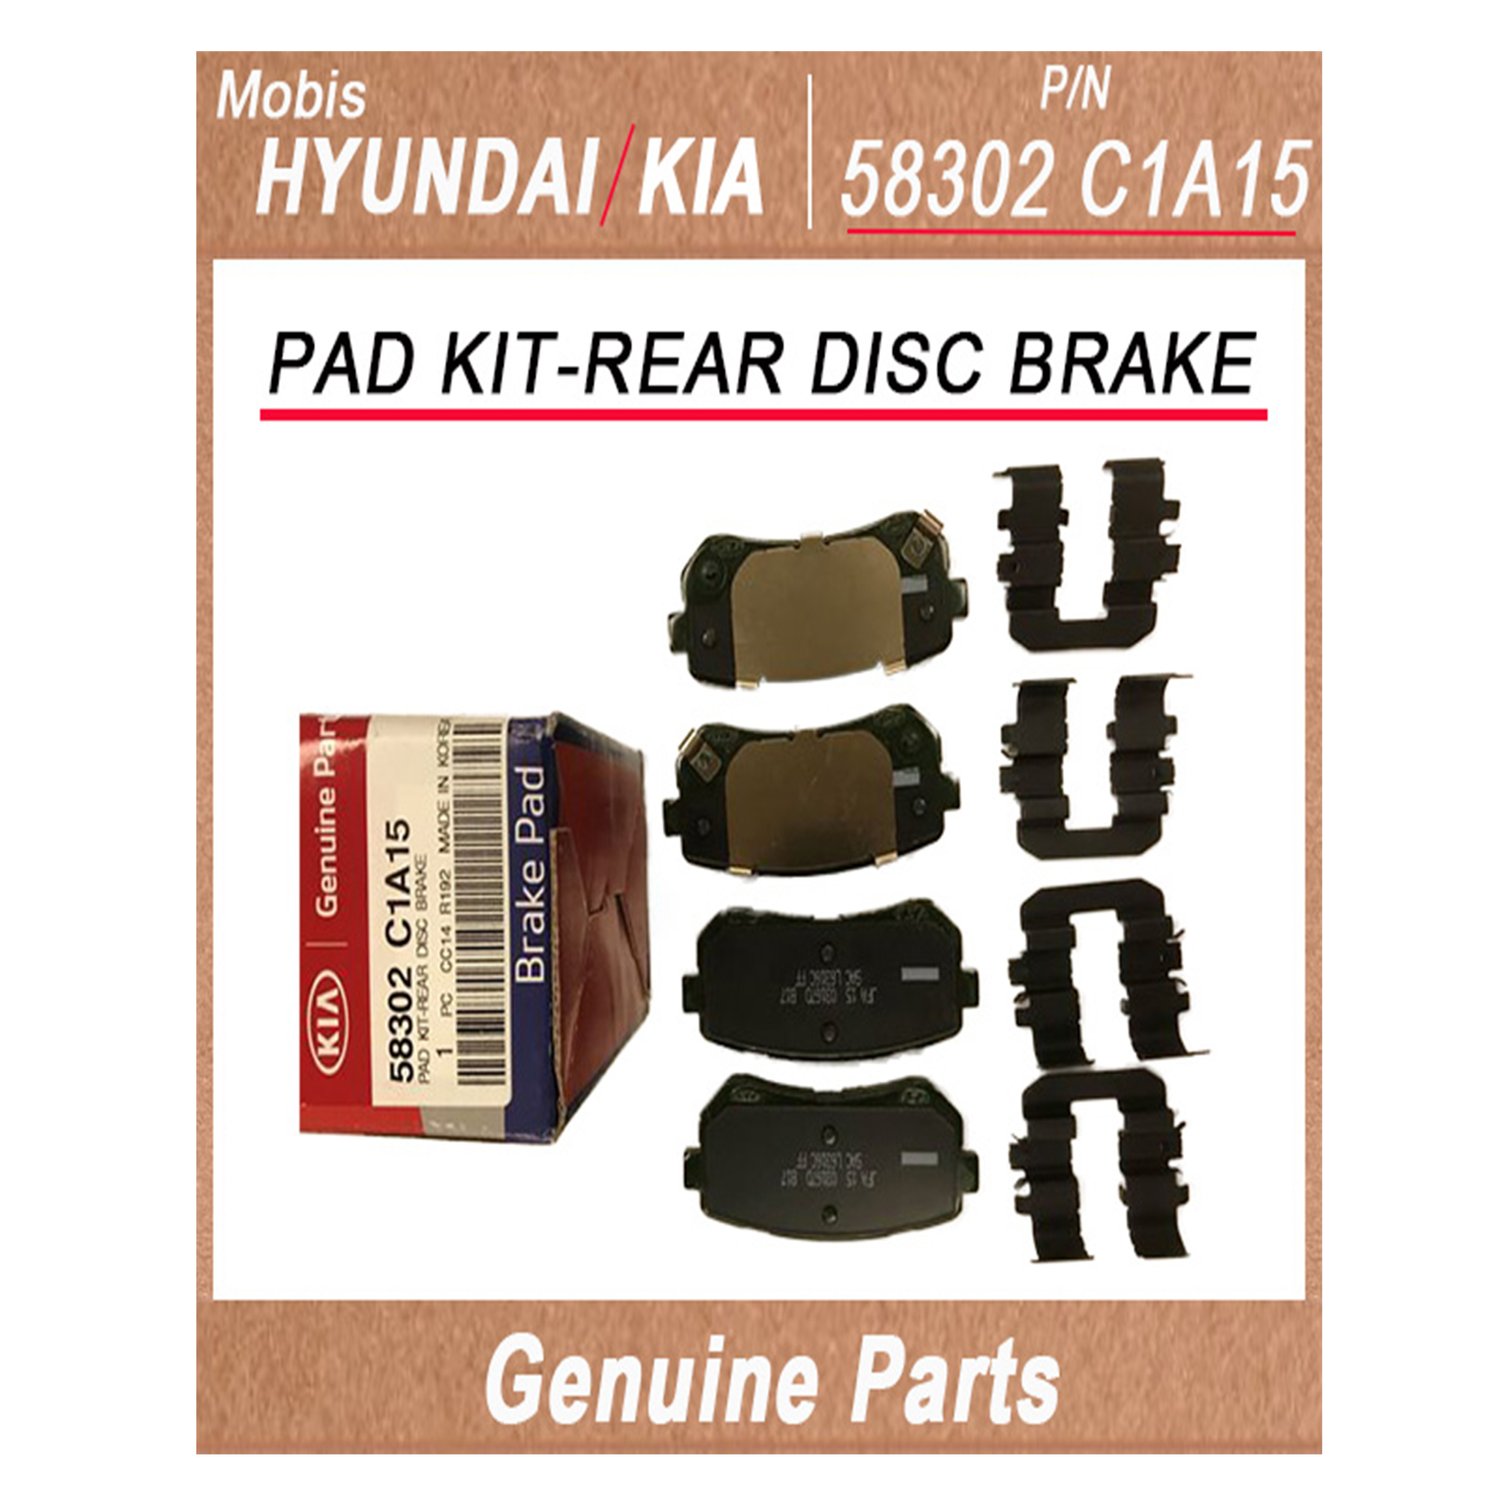 58302C1A15 _ PAD KIT_REAR DISC BRAKE _ Genuine Korean Automotive Spare Parts _ Hyundai Kia _Mobis_